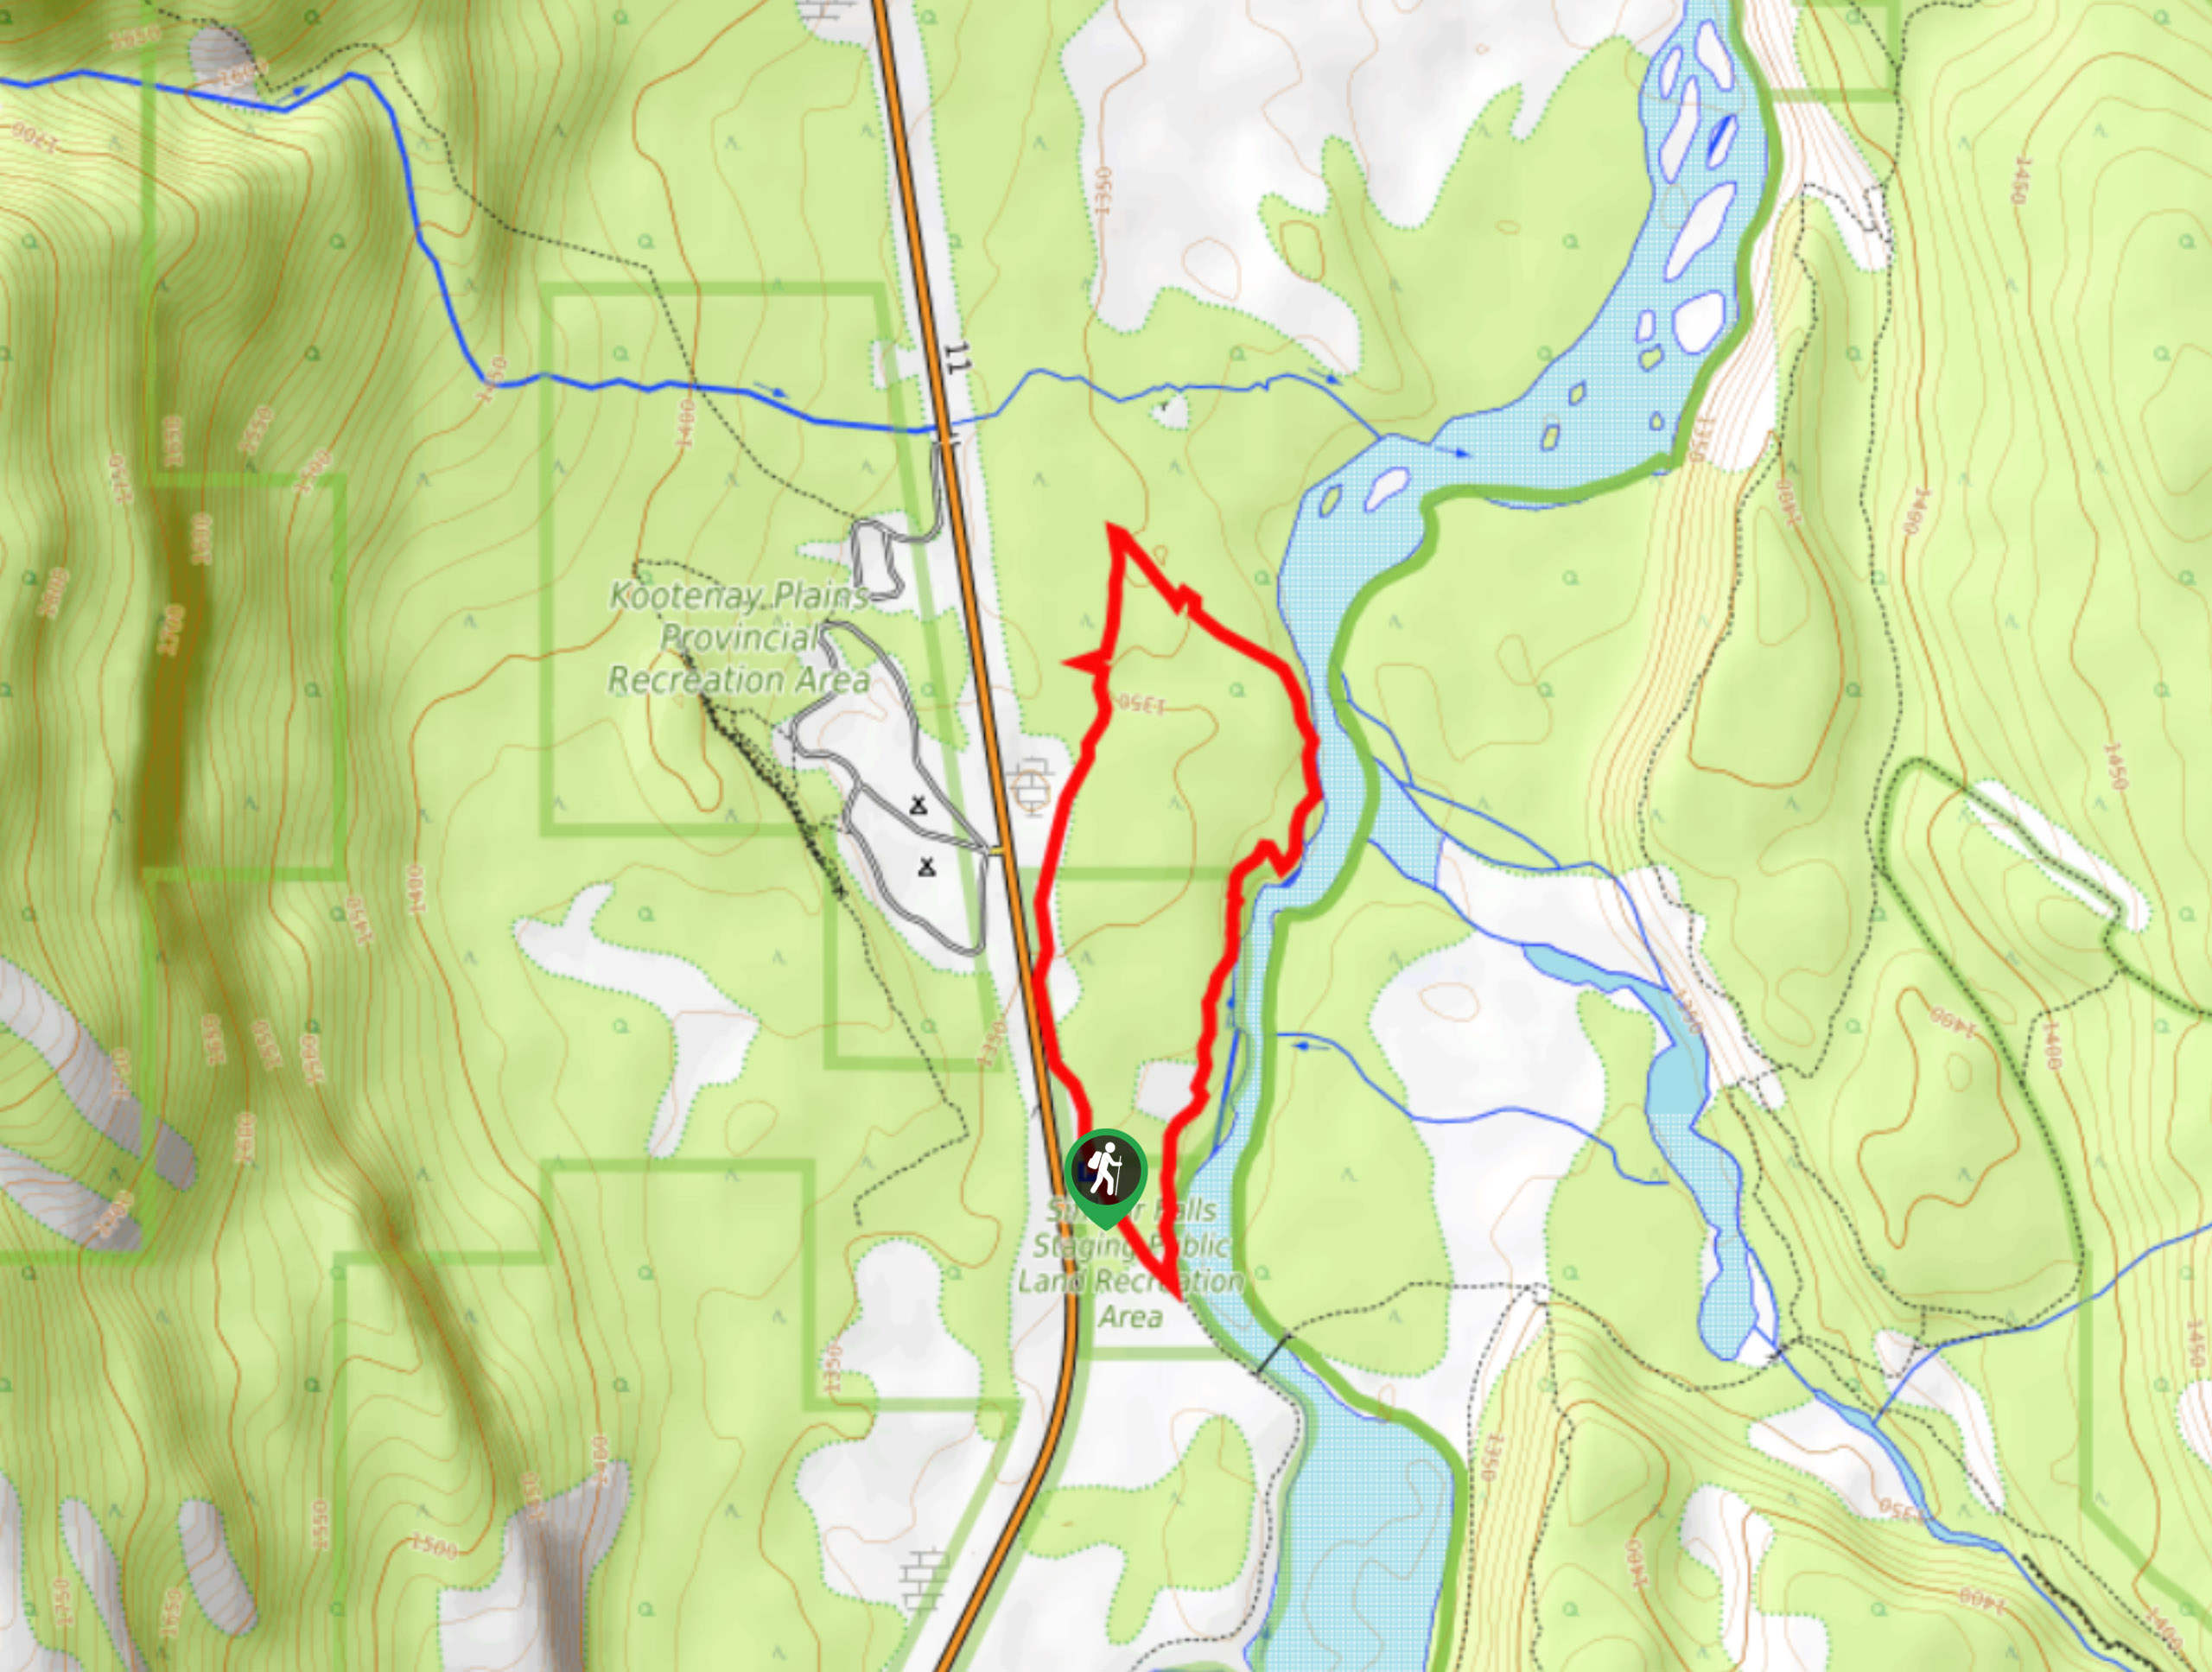 Kootenay Plains Heritage Trail Map